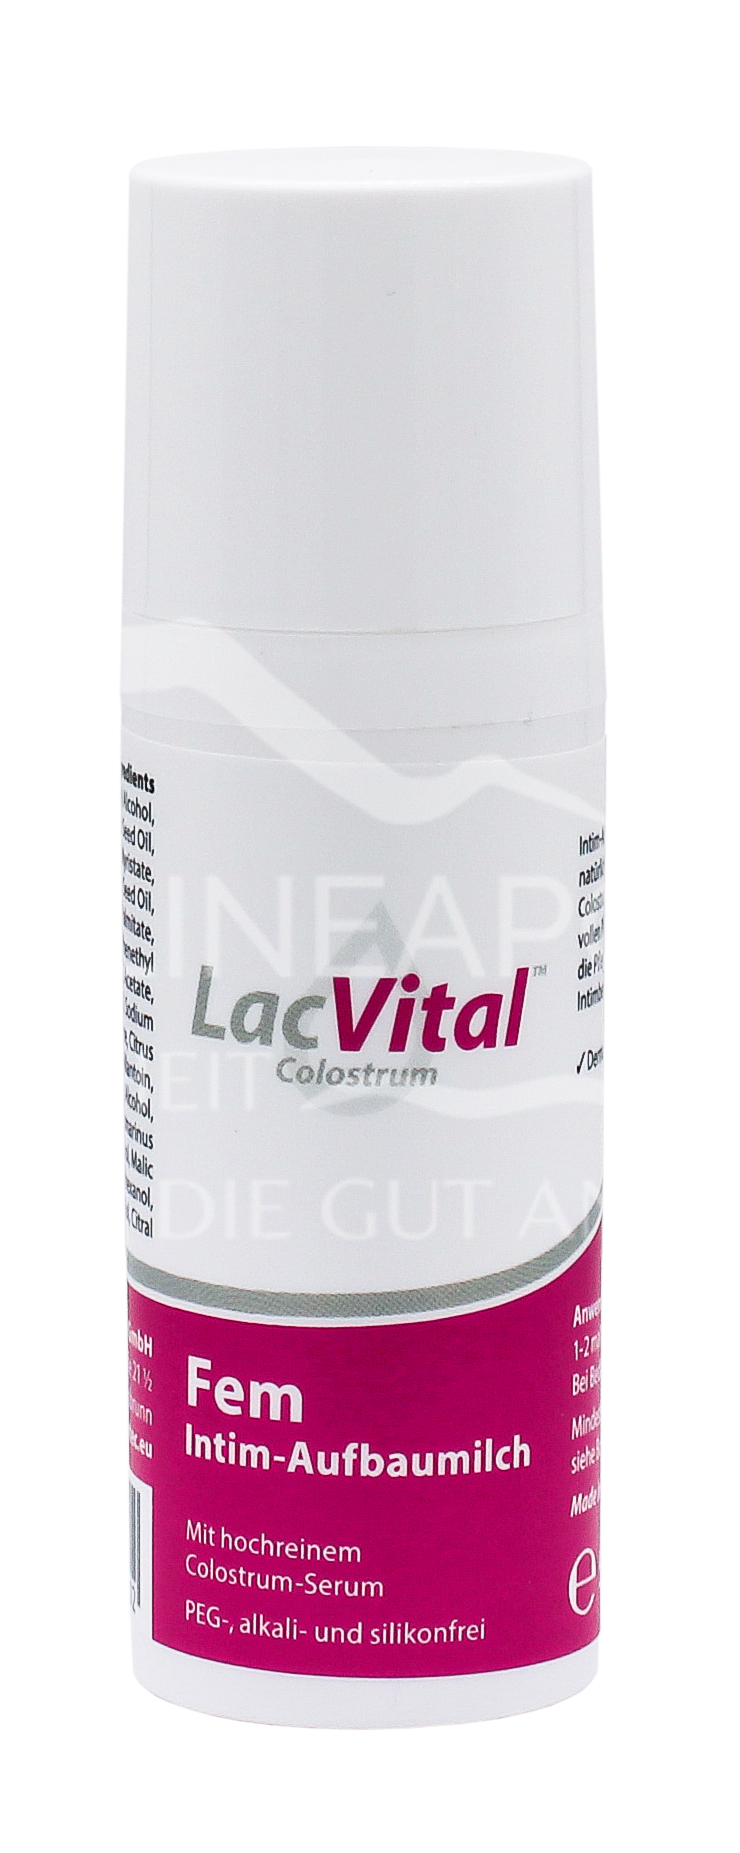 LacVital™ Colostrum FEM Intim-Aufbaumilch